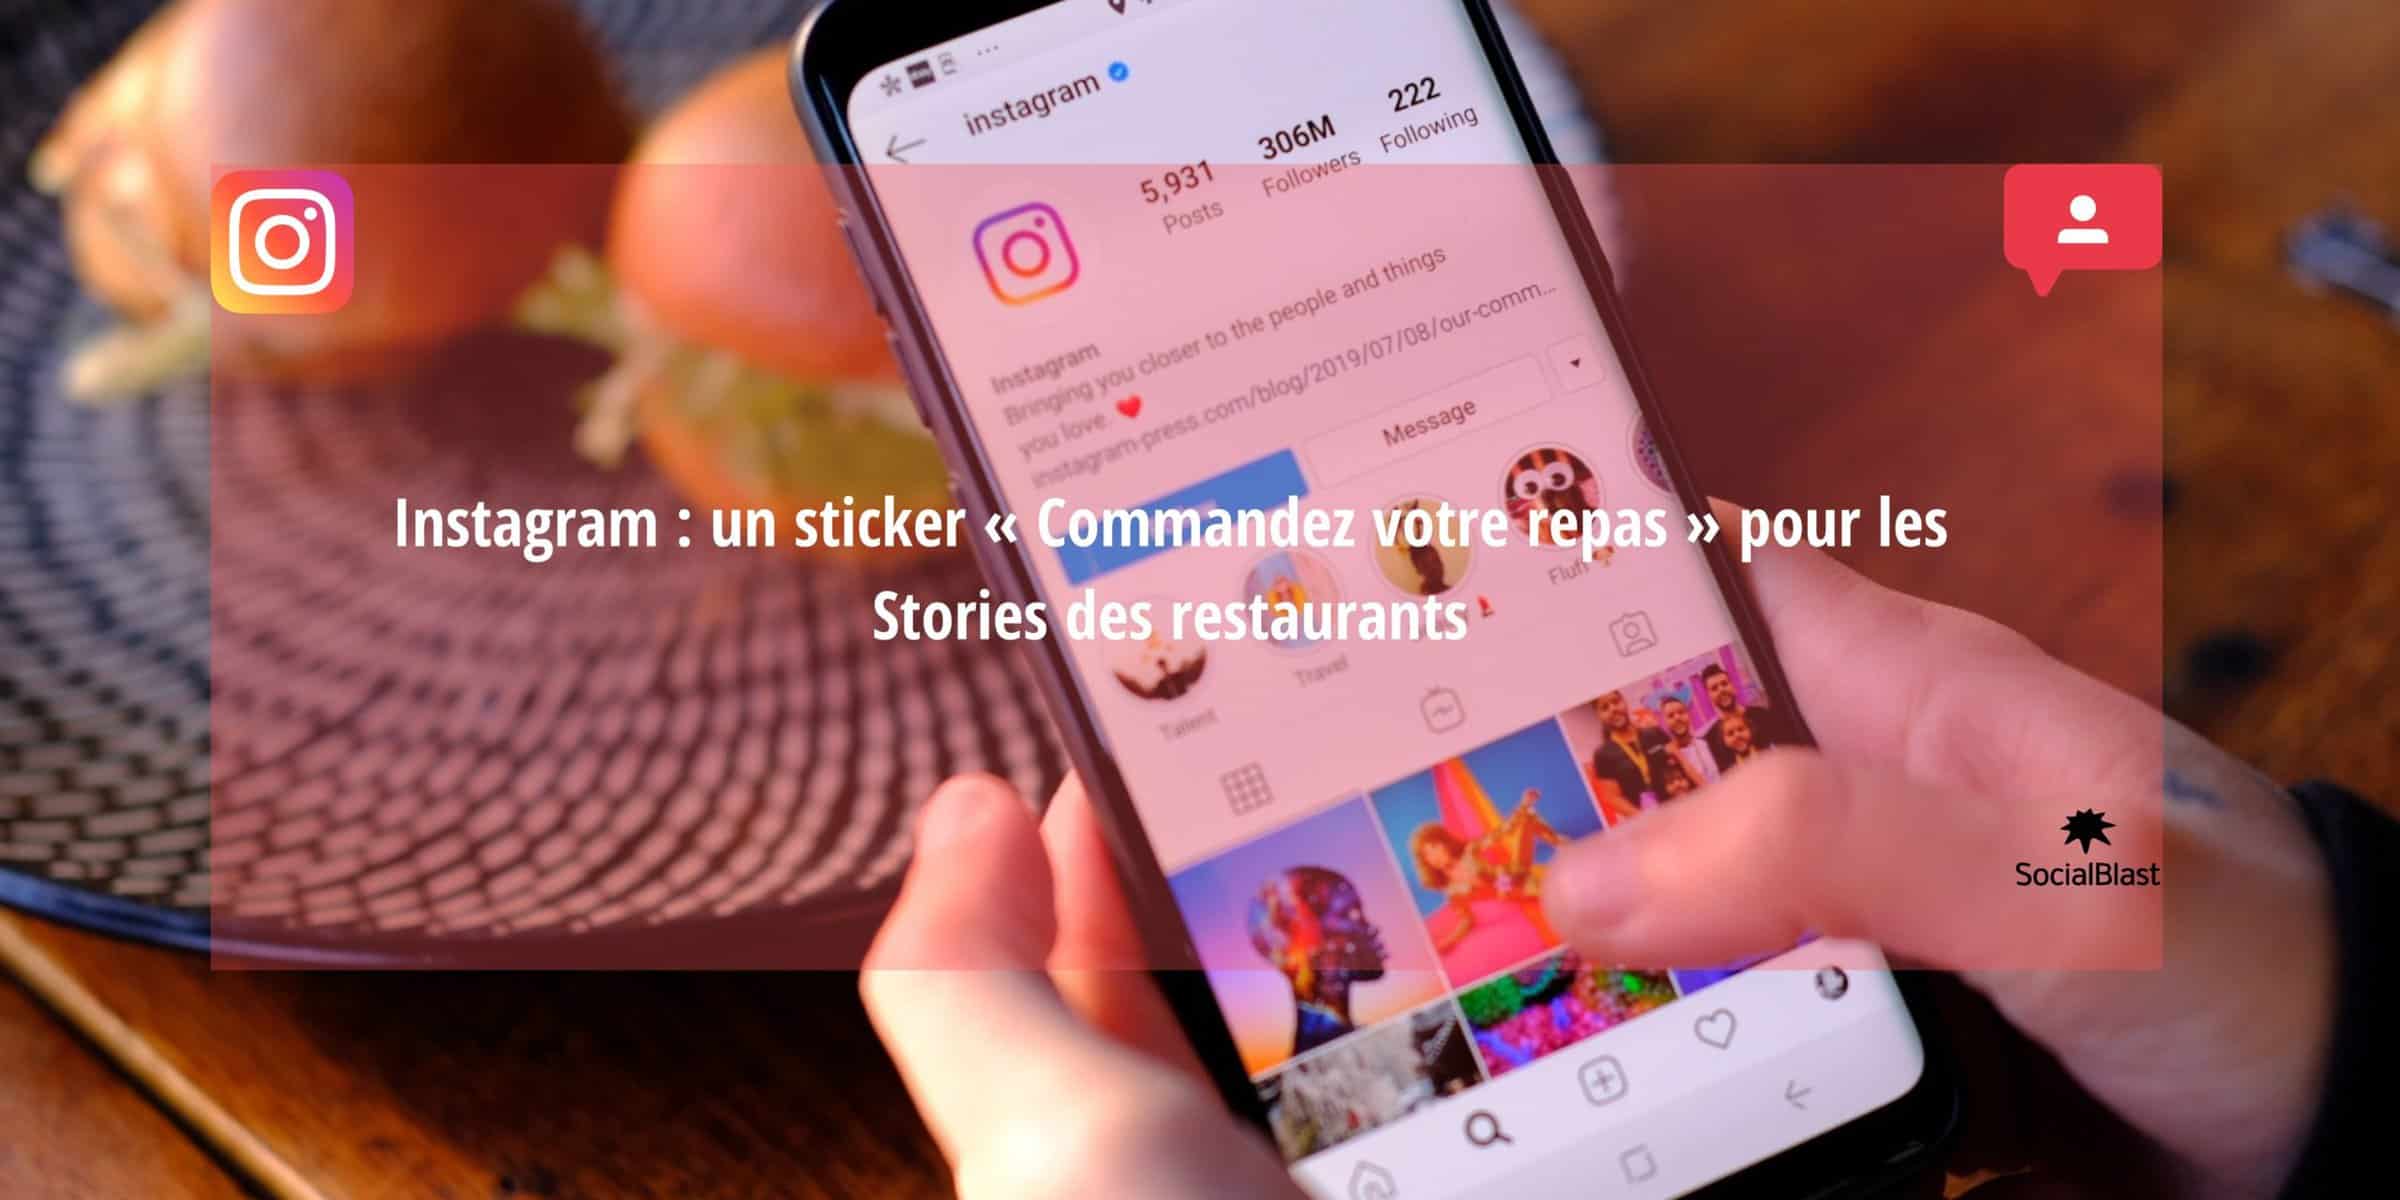 Instagram para promocionar tu restaurante